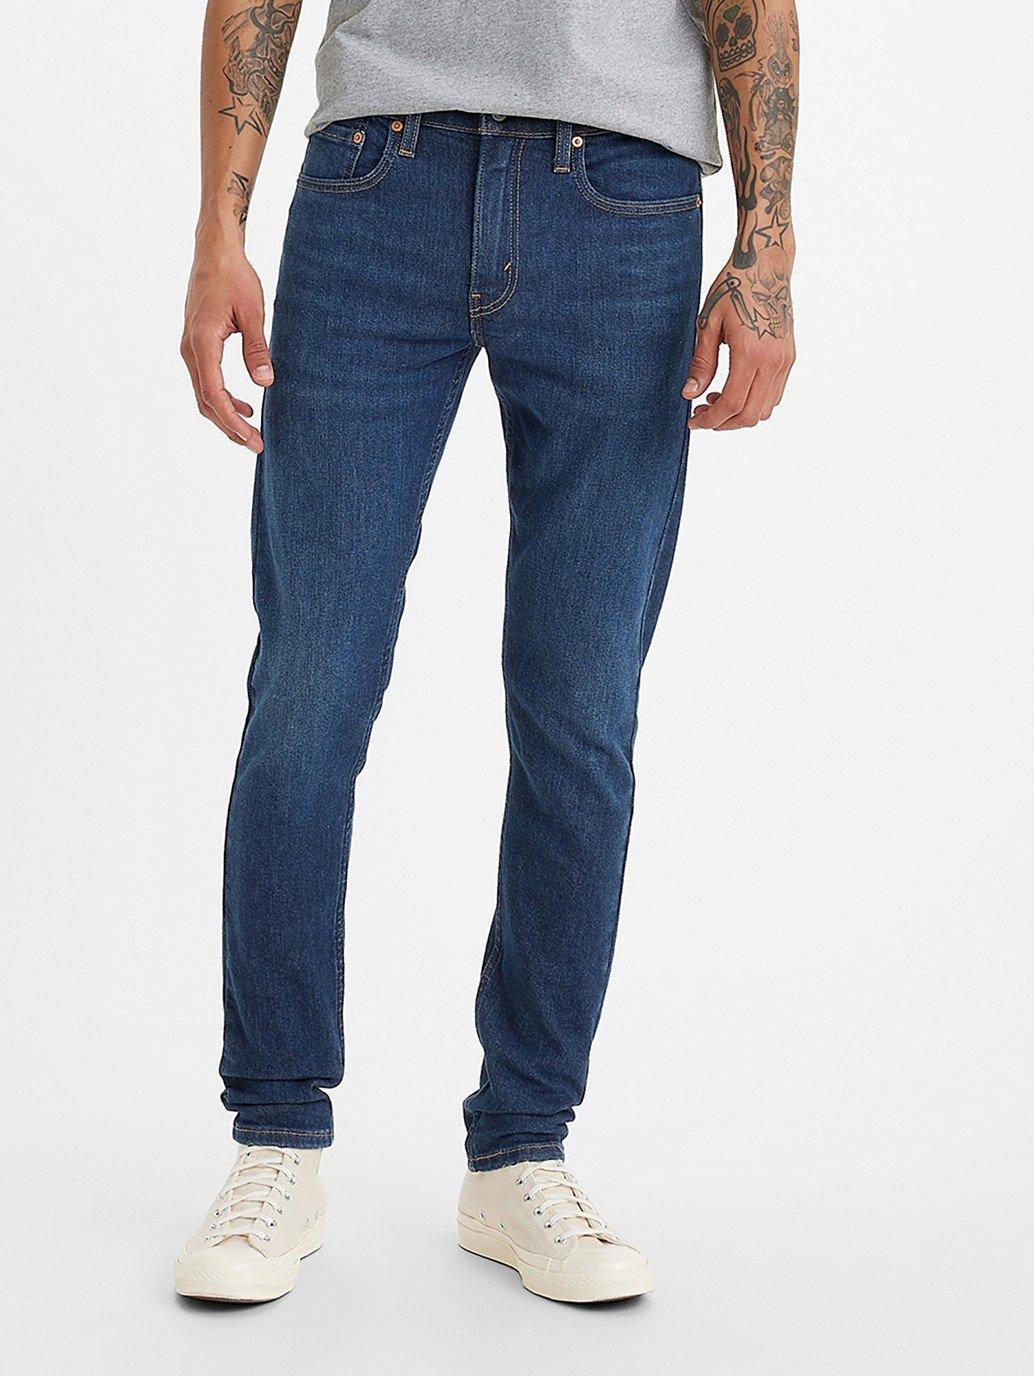 Introducir 66+ imagen levi’s super stretch jeans mens